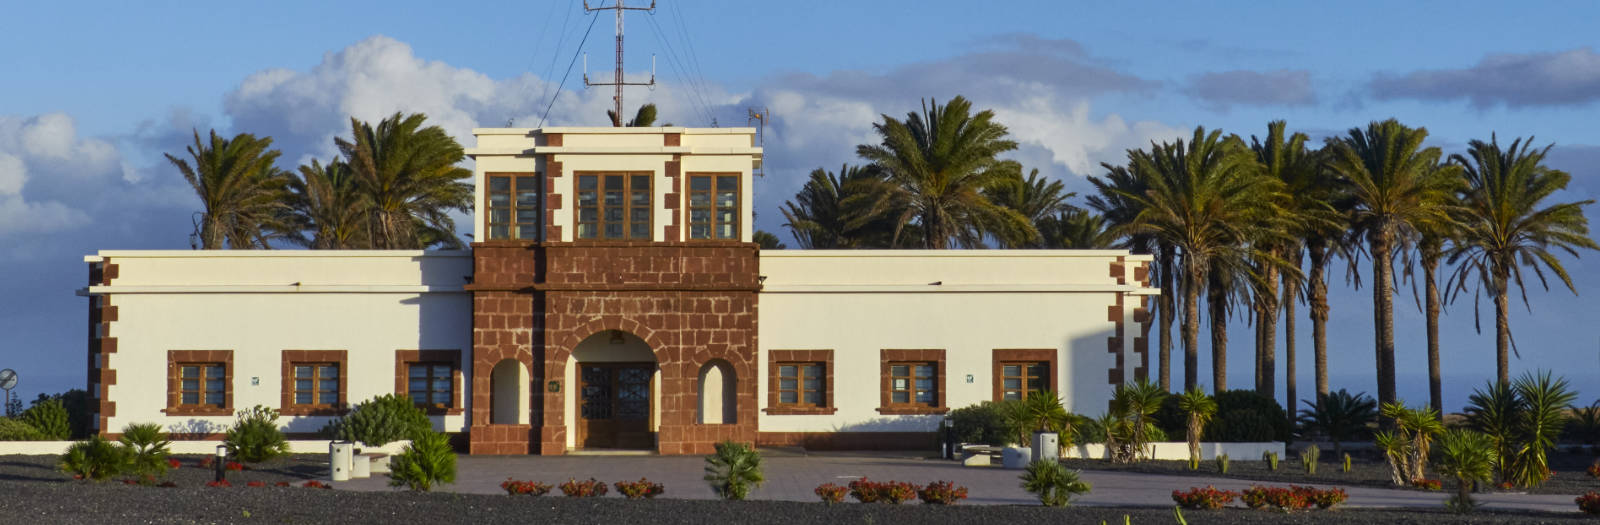 Historisches Flughafengebäude Los Estancos Fuerteventura.